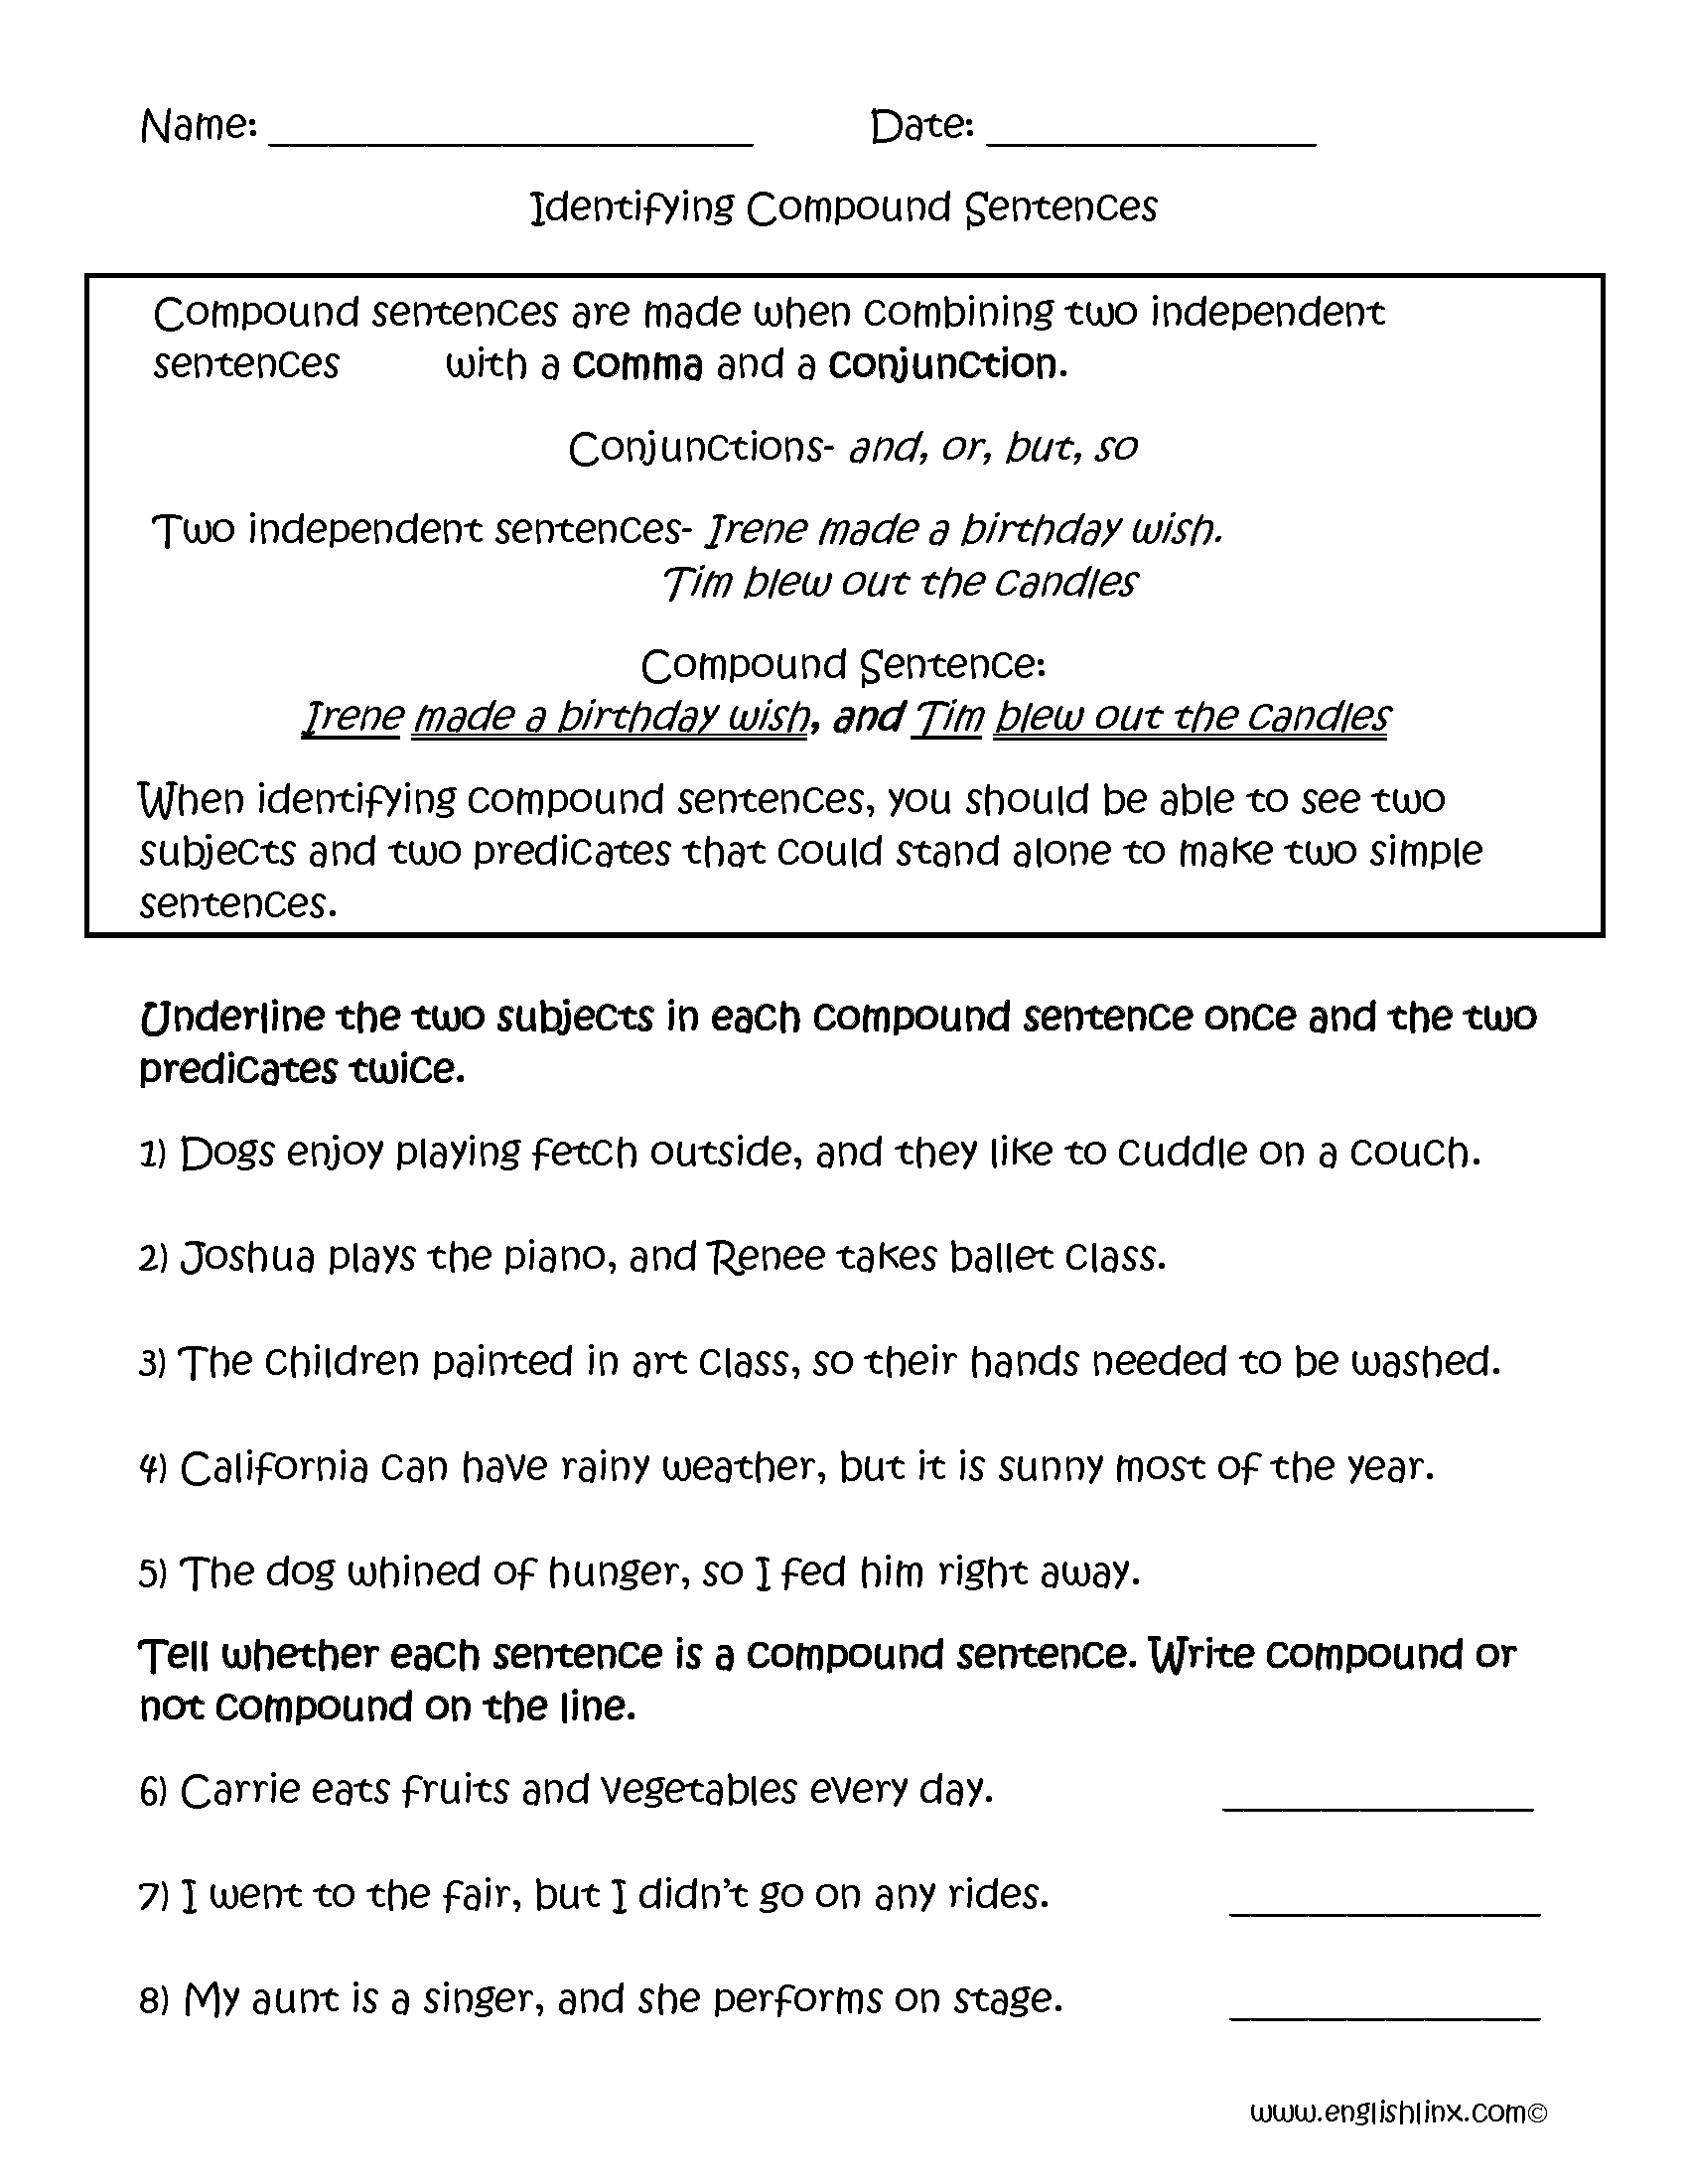 Identifying Compound Sentences Worksheets Simple And Compound Sentences Compound Sentences